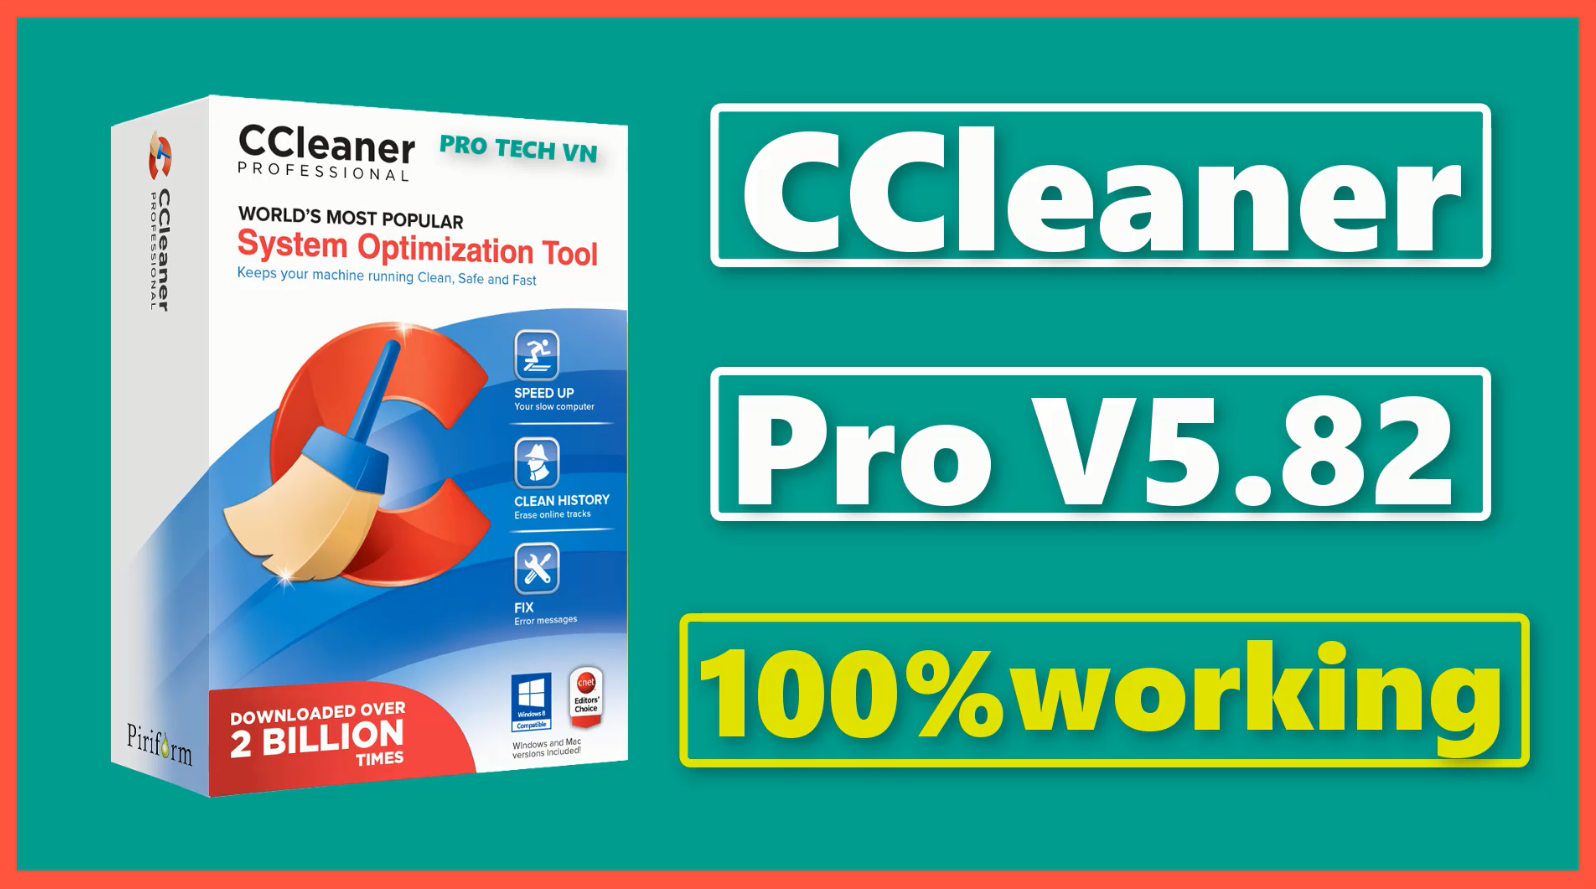 ccleaner pro 5.82